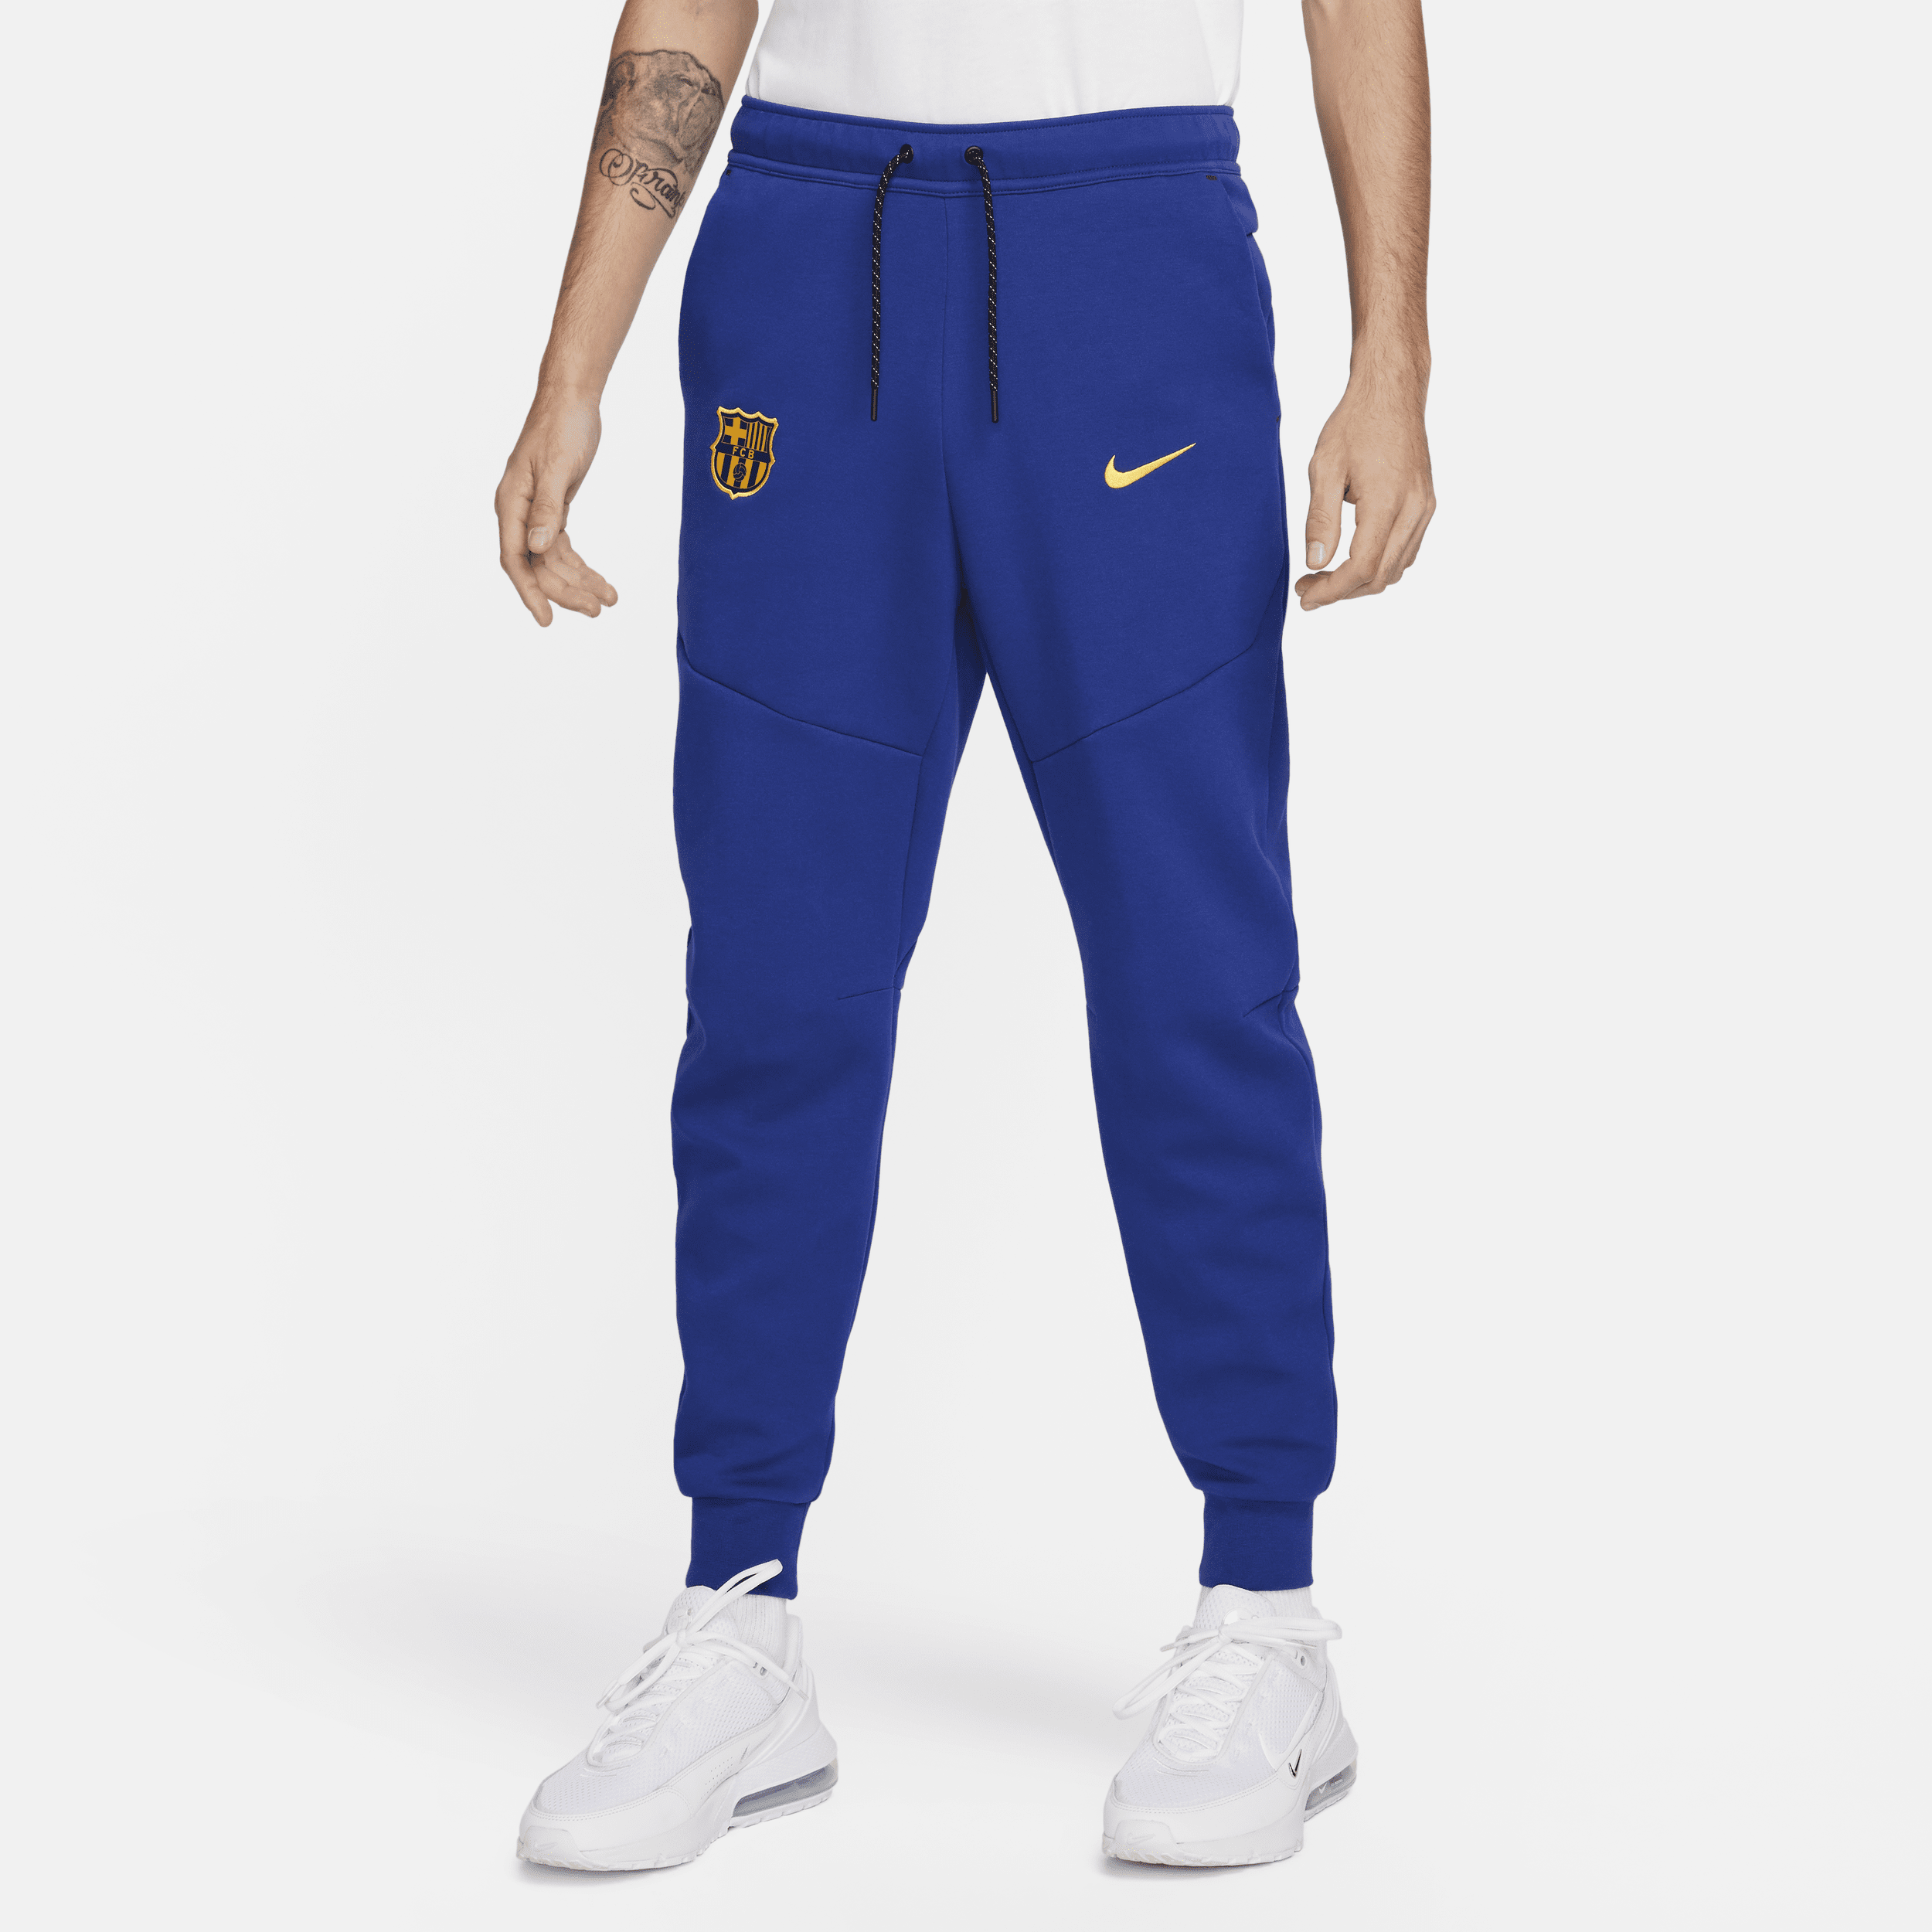 FC Barcelona Tech Fleece Nike-fodboldjoggers til mænd - blå